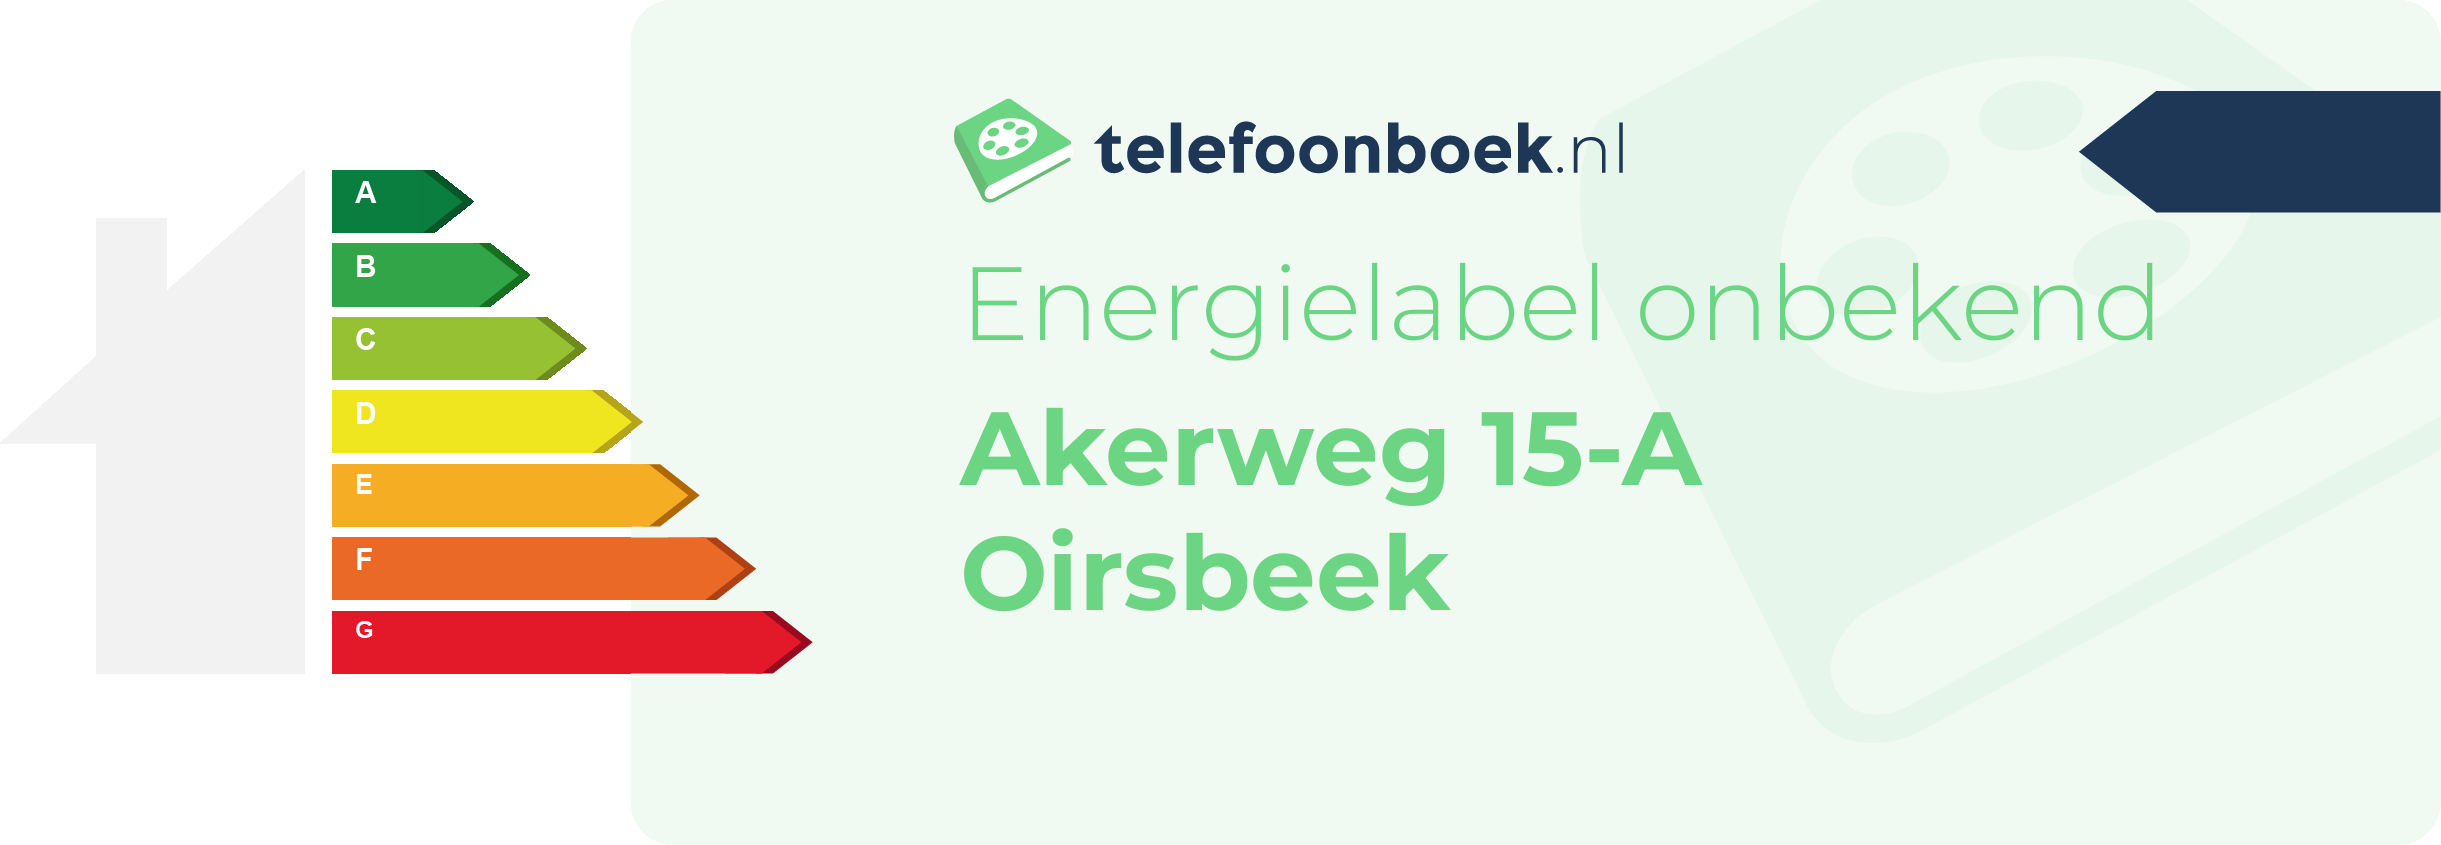 Energielabel Akerweg 15-A Oirsbeek